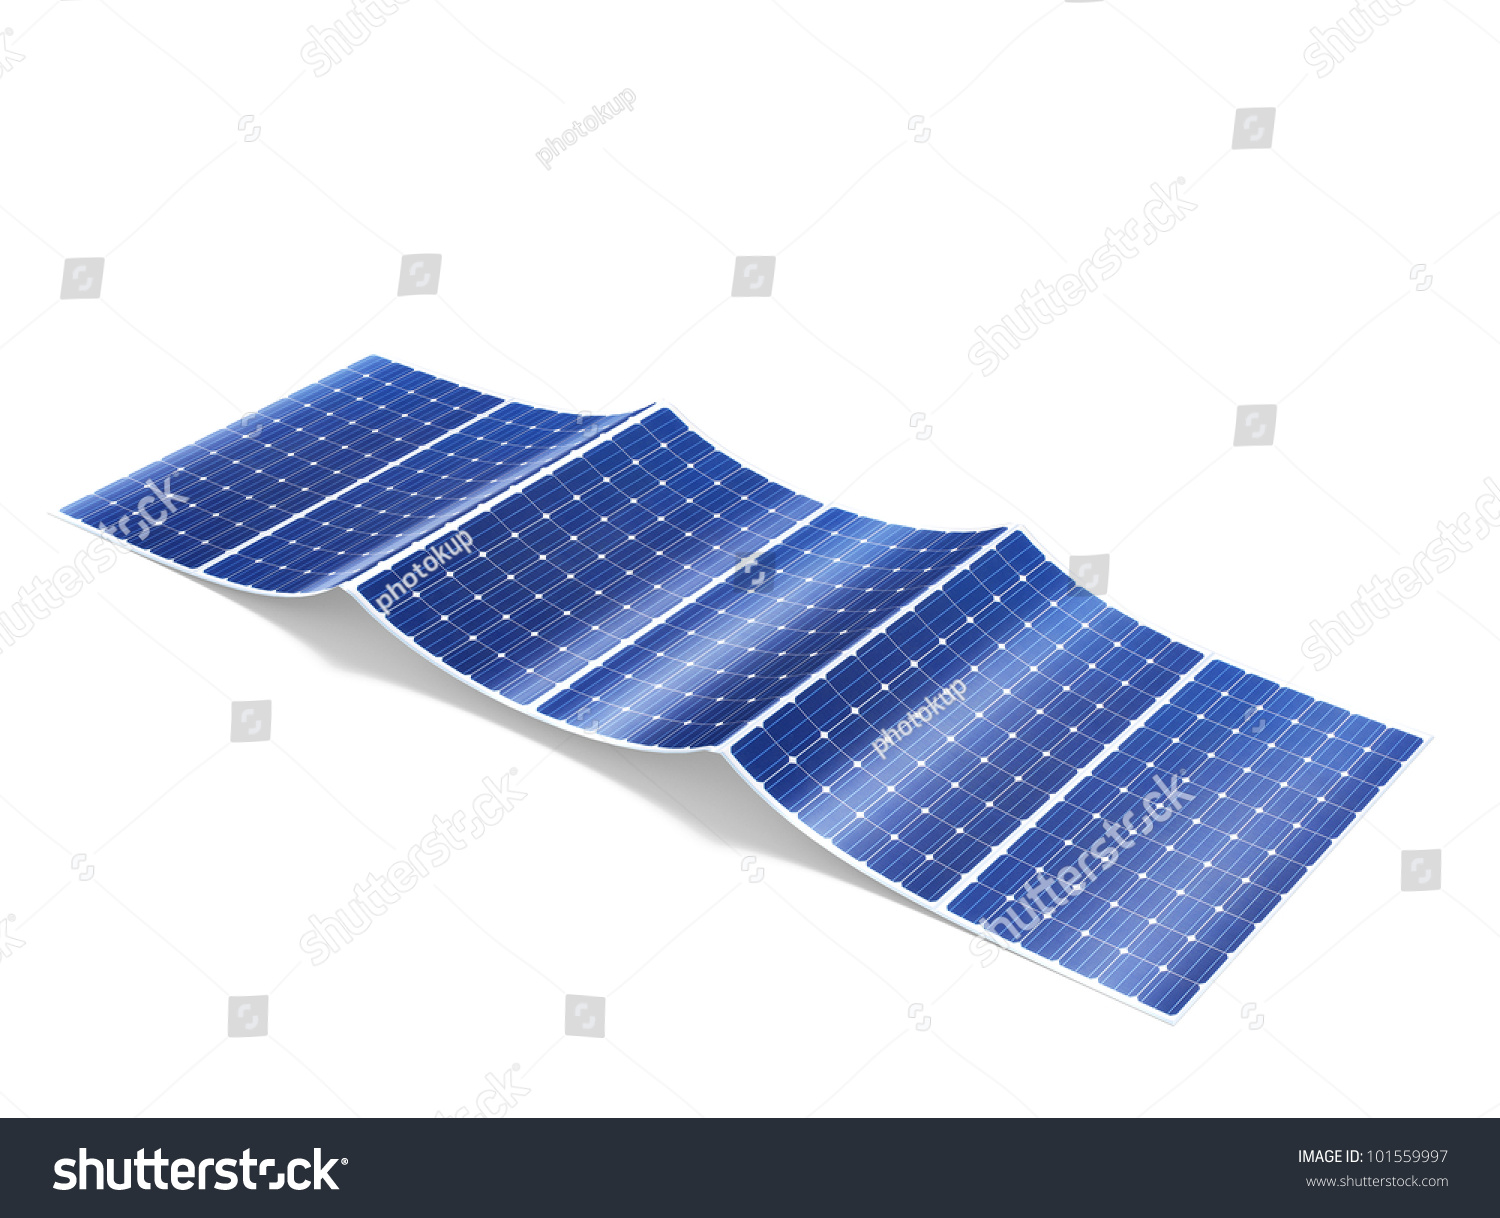 Importance of solar energy